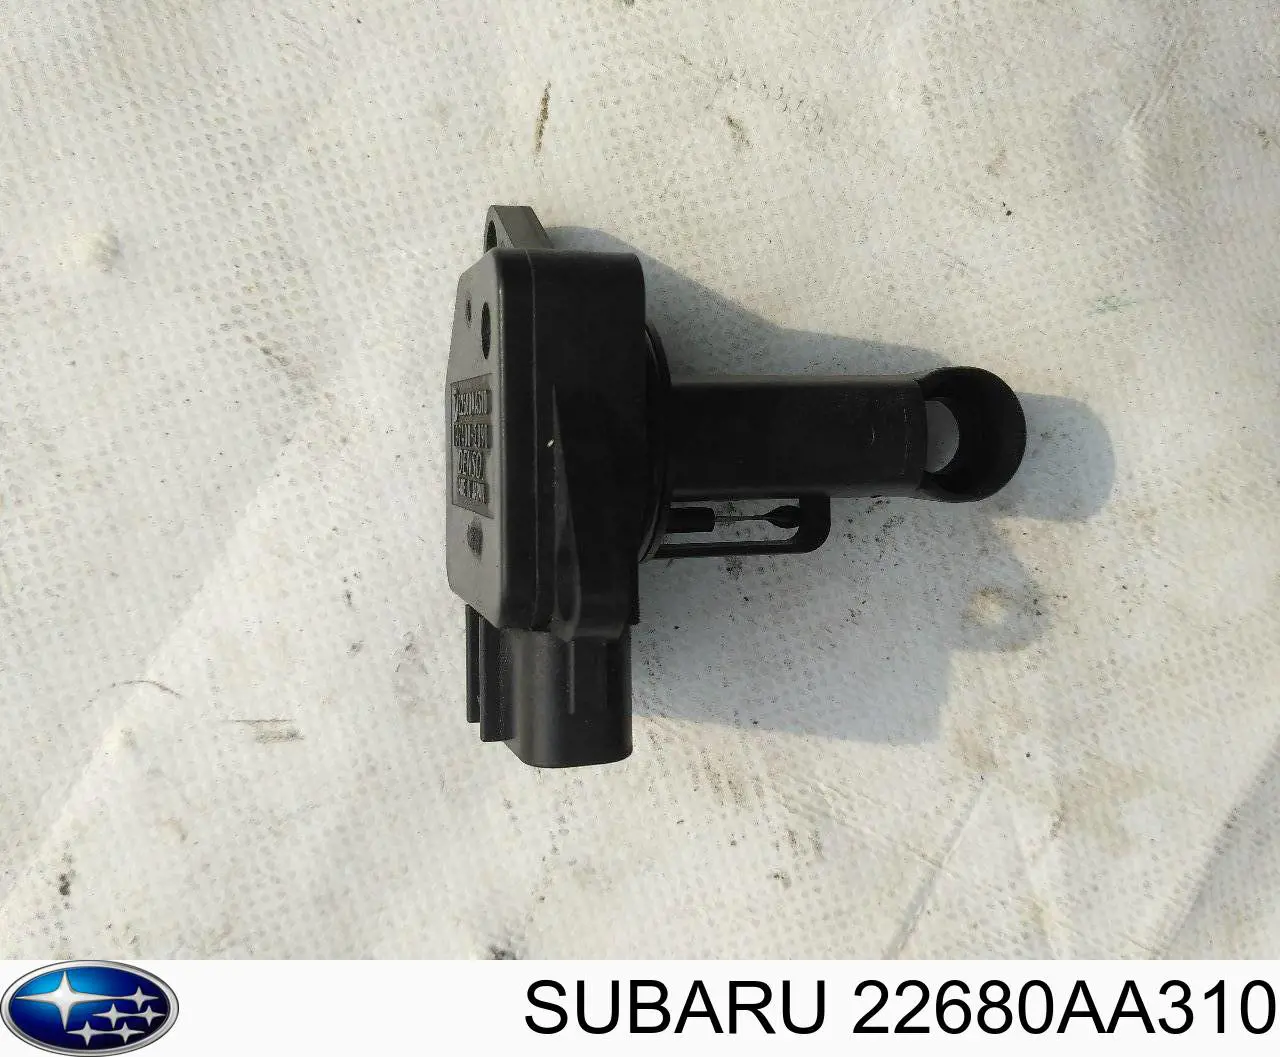 22680AA310 Subaru sensor de fluxo (consumo de ar, medidor de consumo M.A.F. - (Mass Airflow))